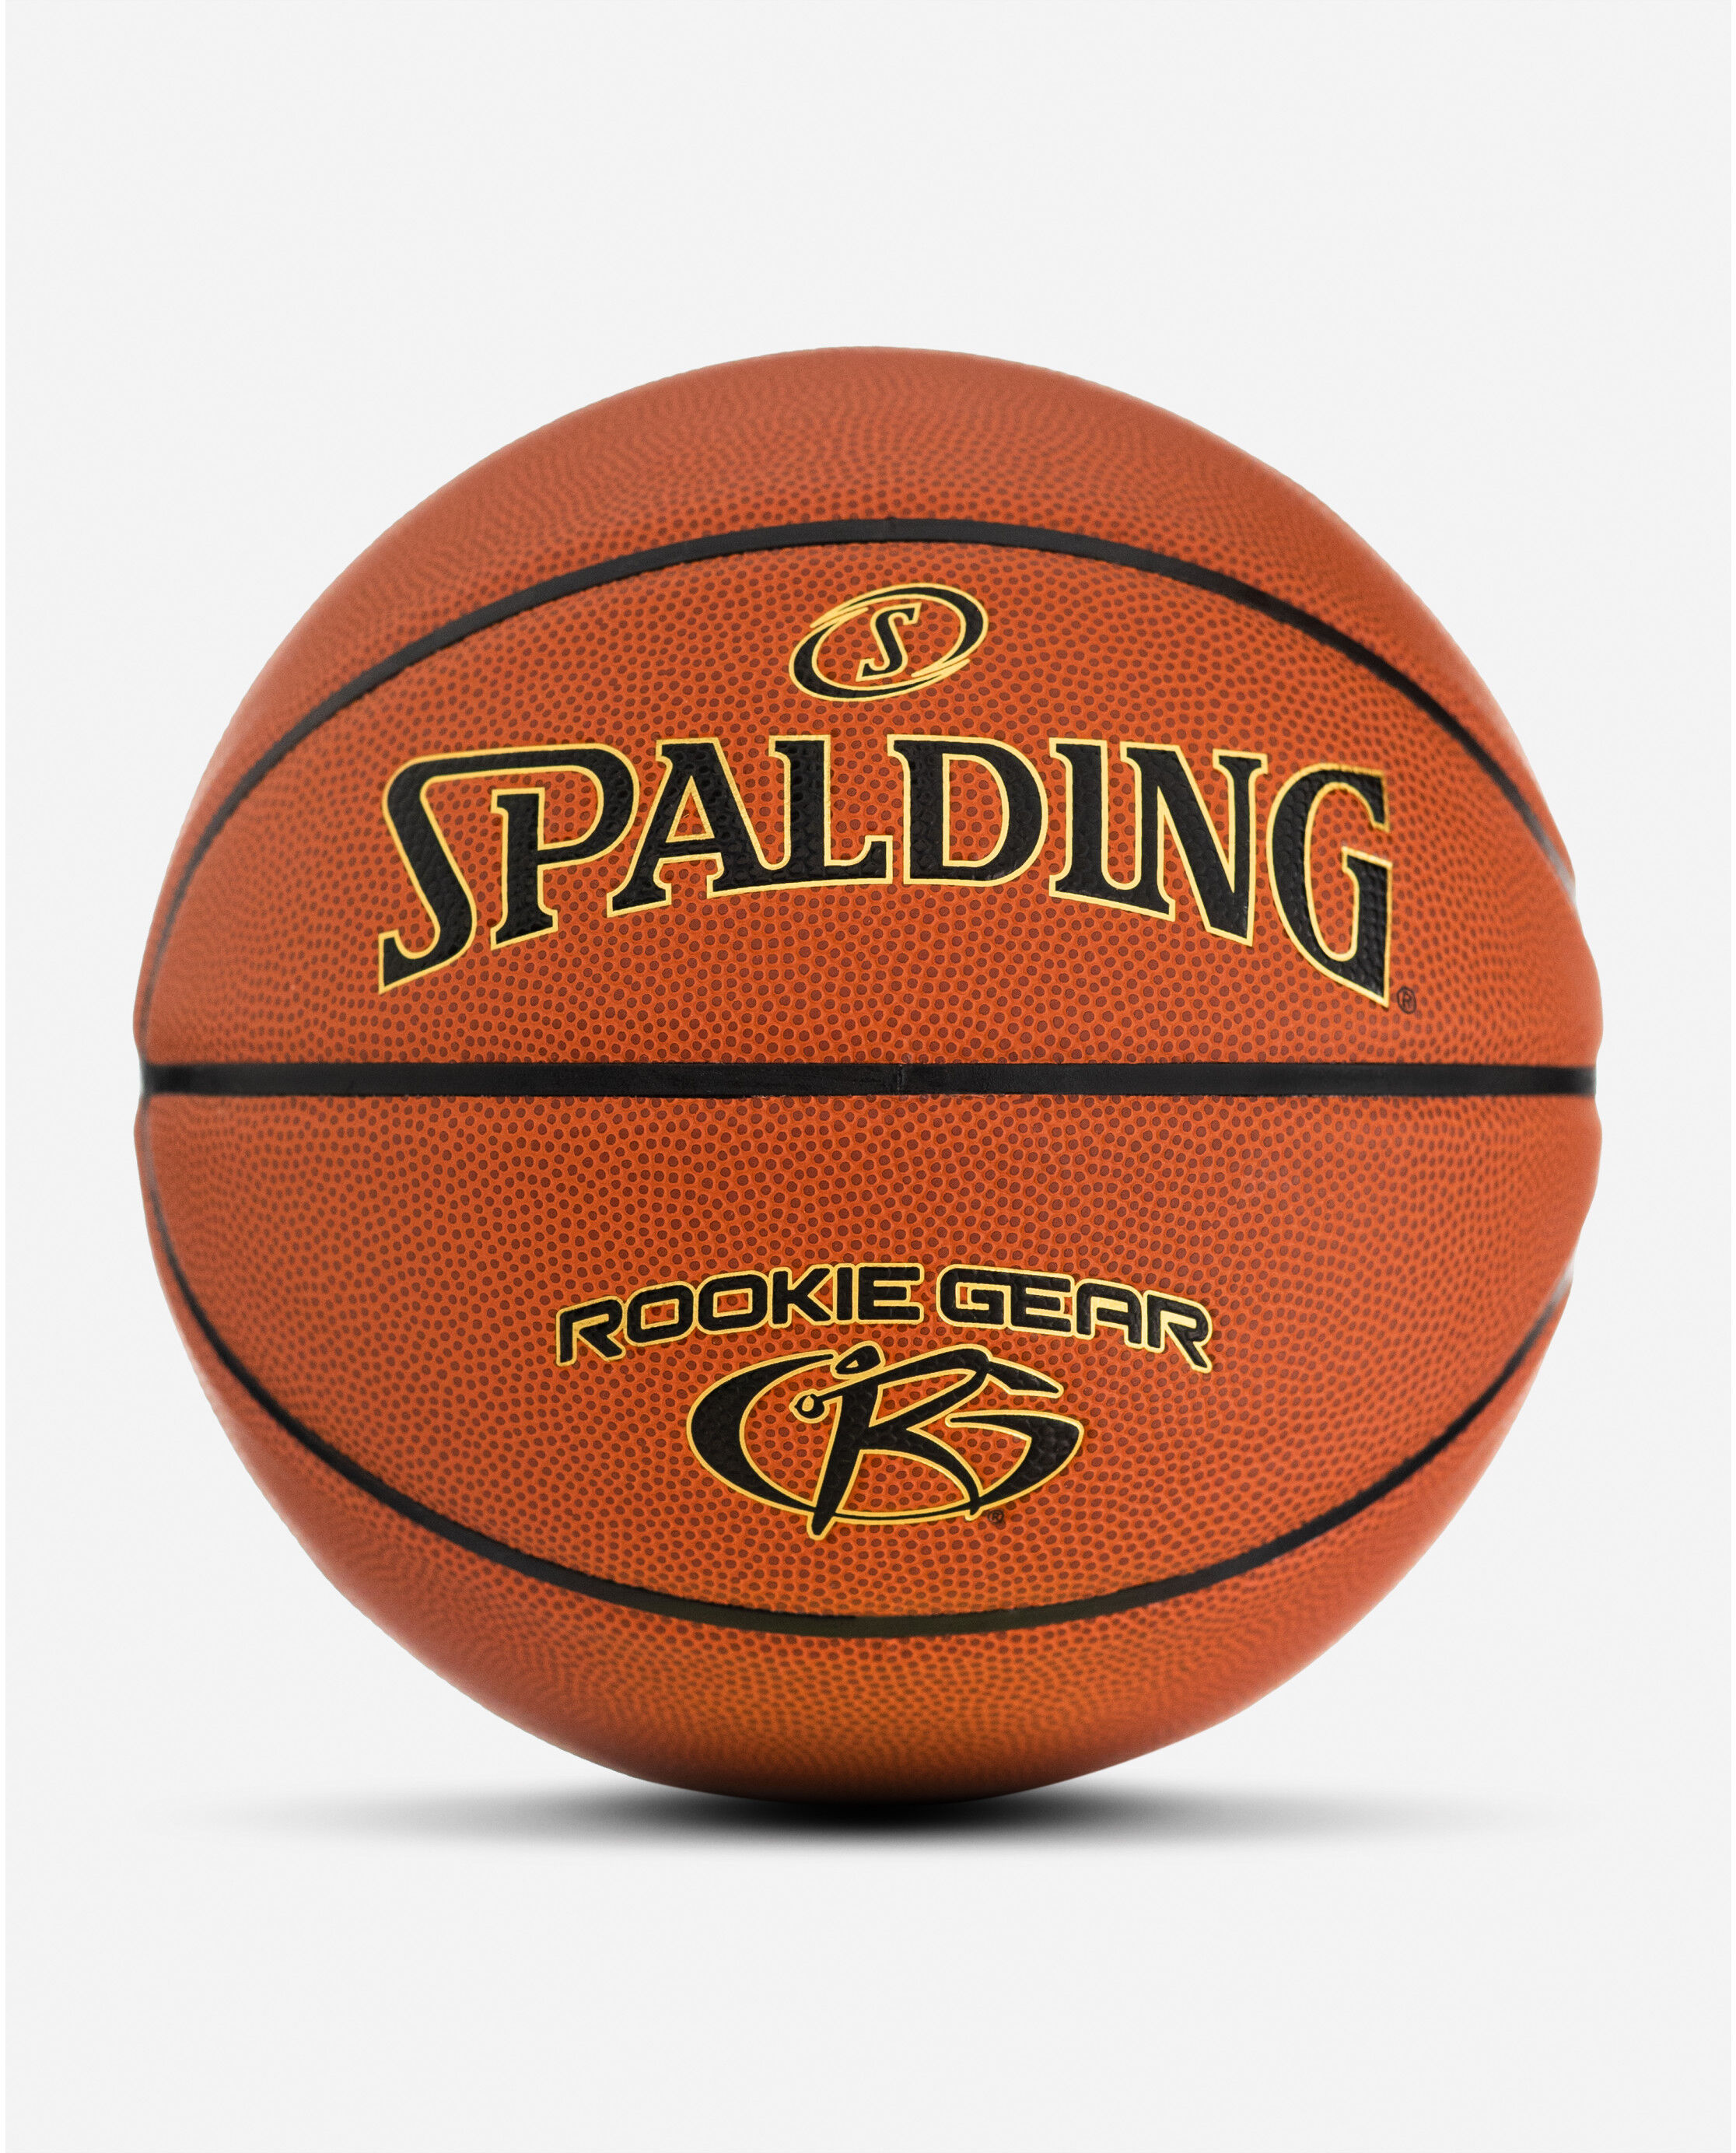 Spalding Rookie Gear Basketball Kids Junior Childrens School Ball Size 4 5 